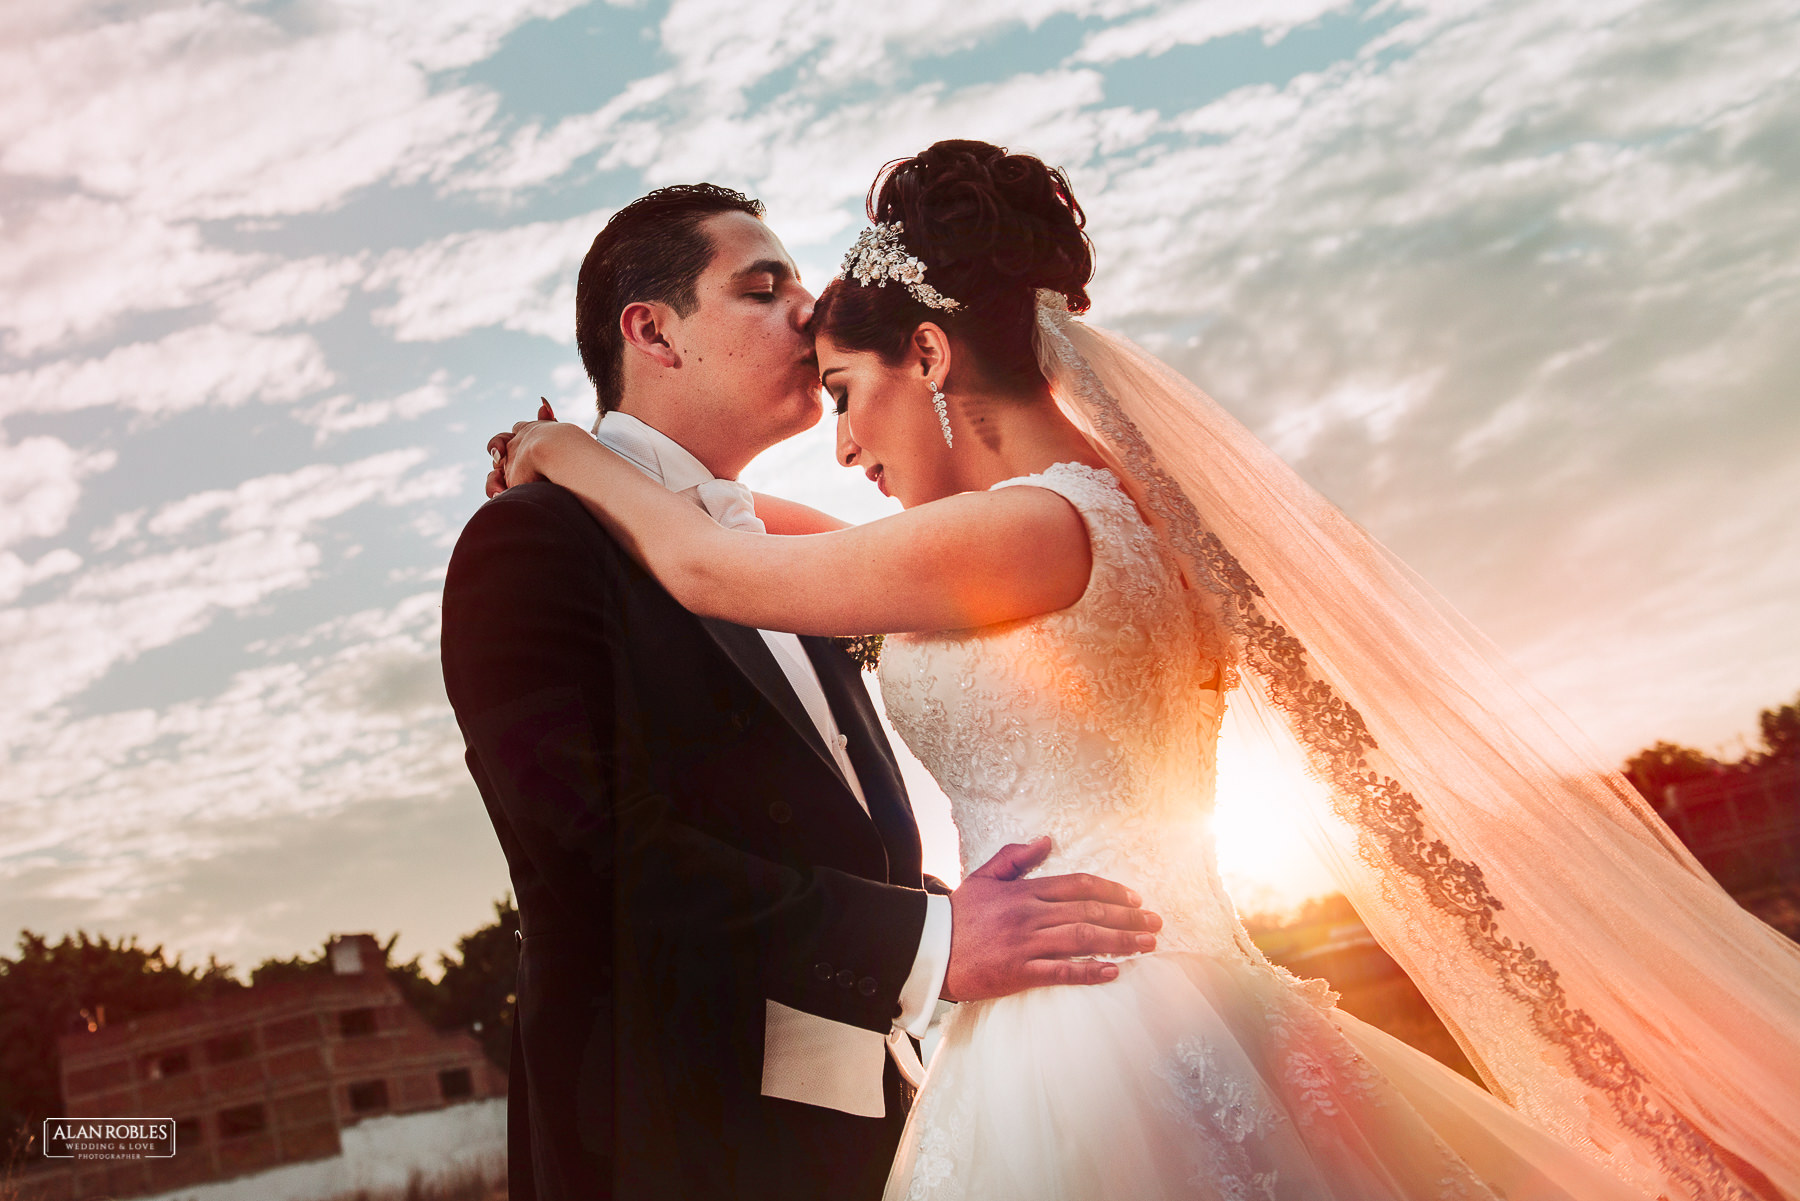 Alan Robles fotografo de bodas guadalajara - LyP Hotel Demetria-59